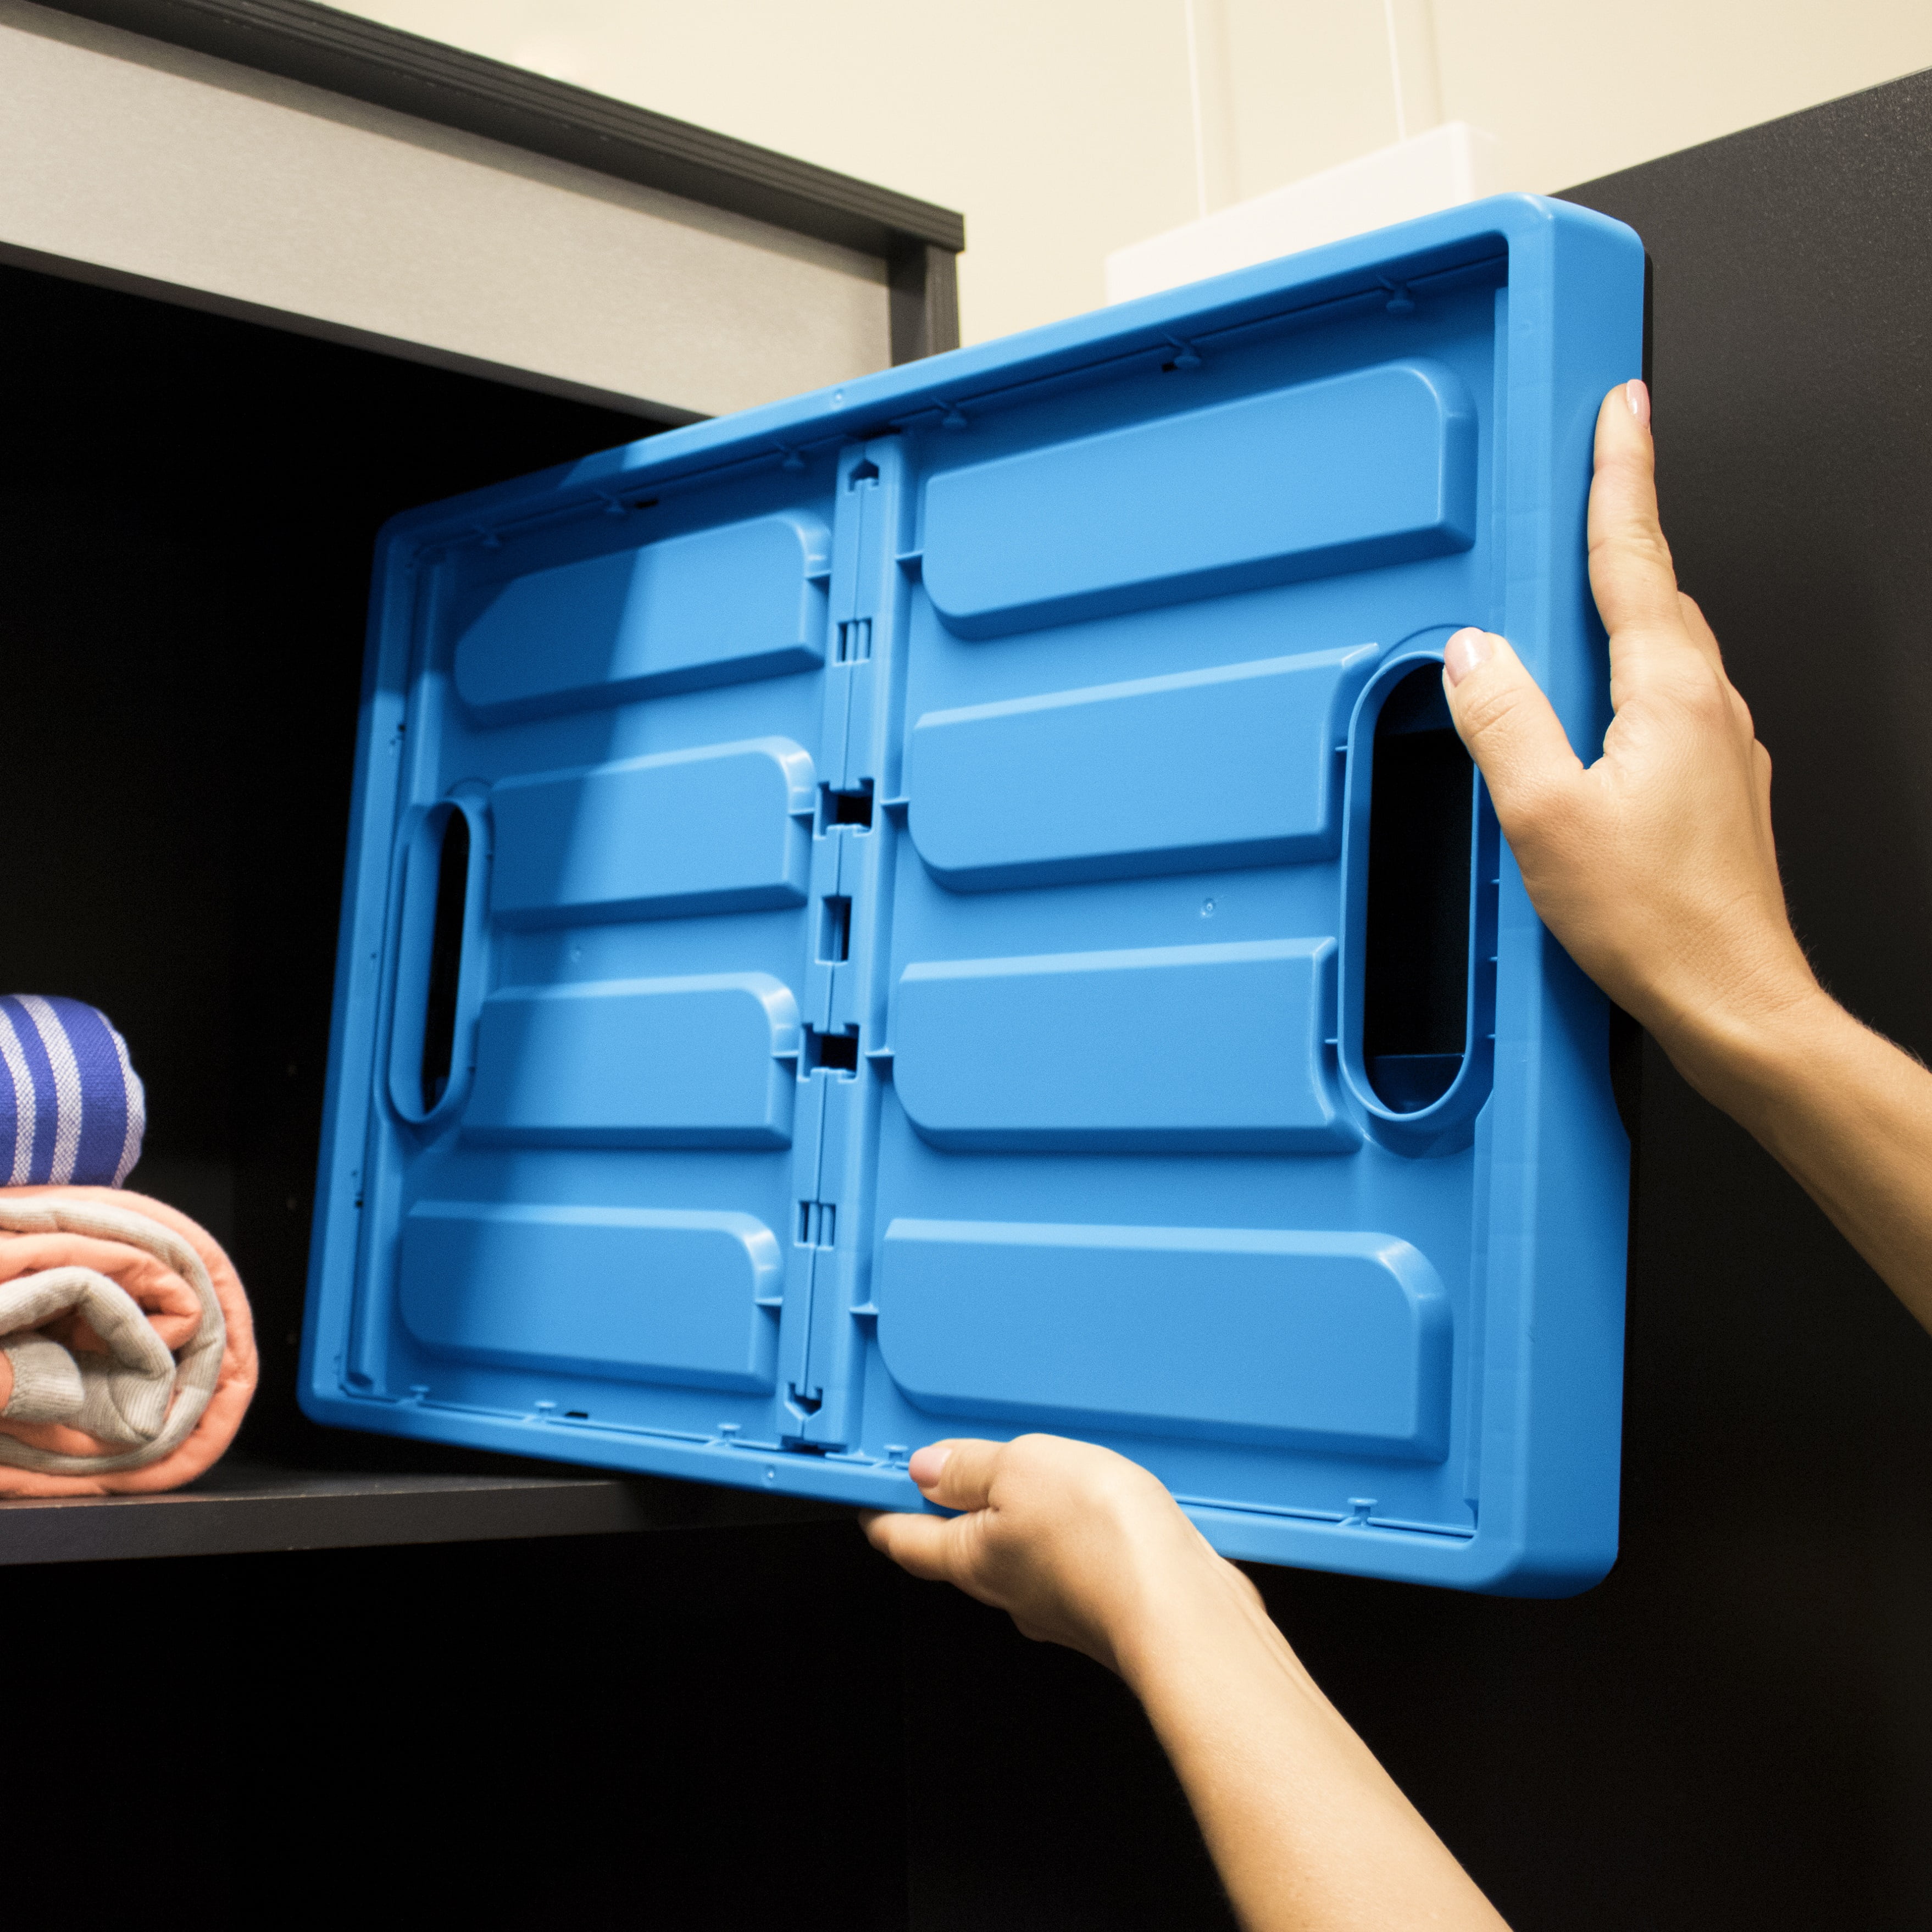 62 Litre Upcycled Plastic Storage Box - Storage N Stuff